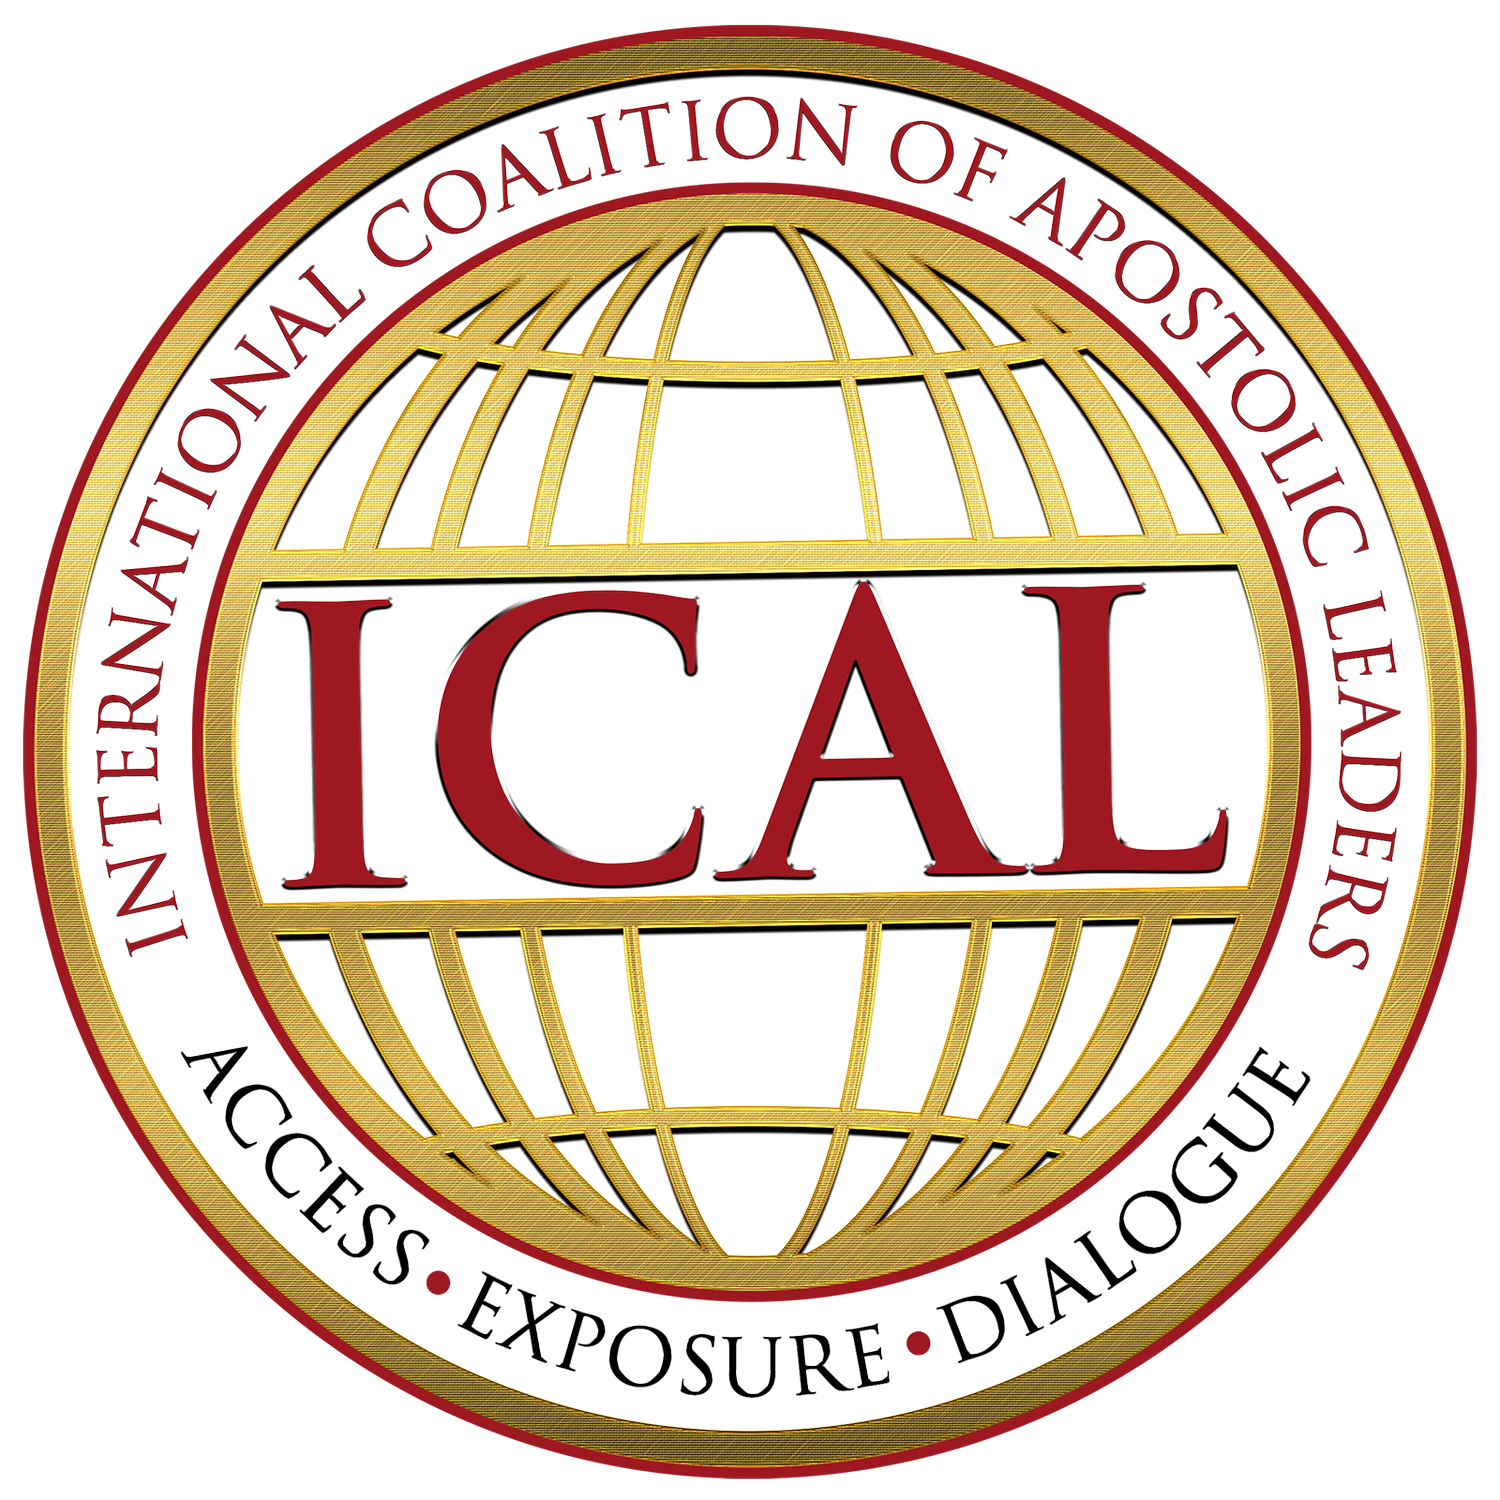 International Coalition of Apostolic Leaders